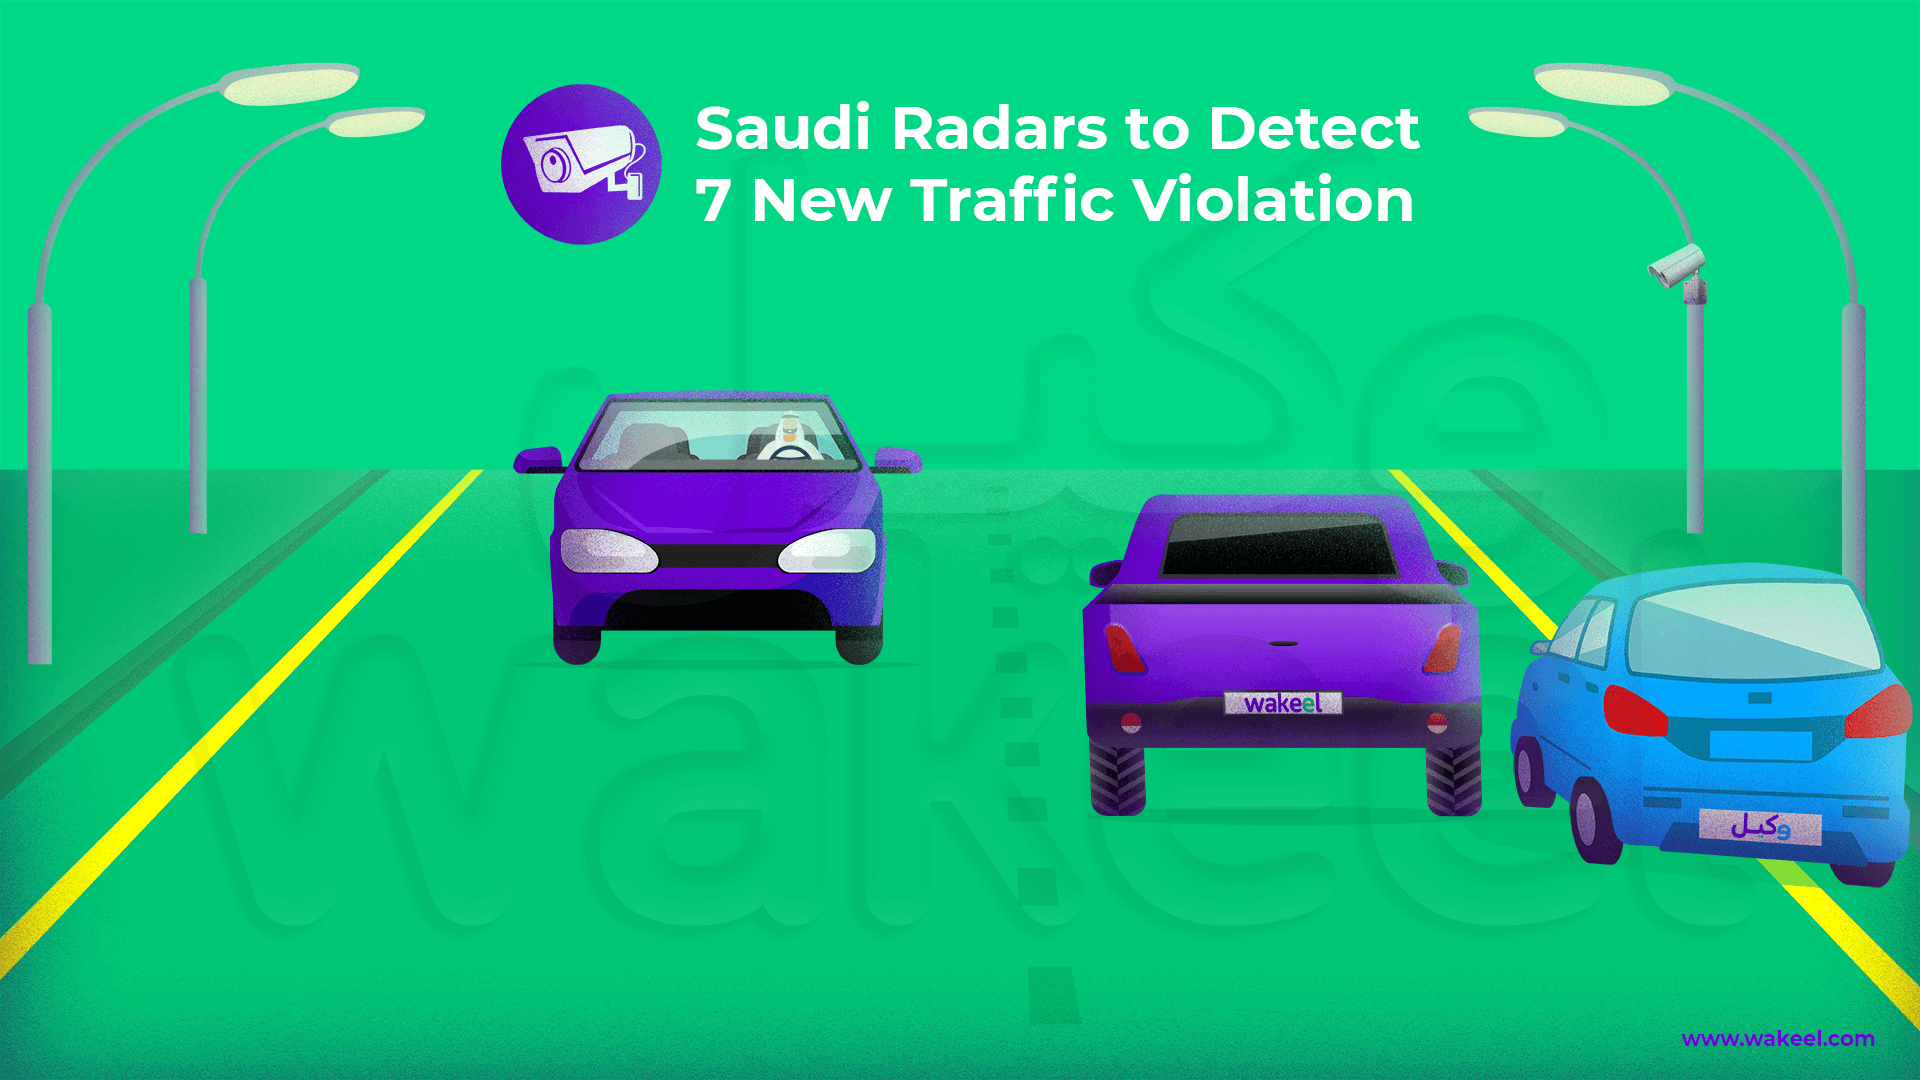 Saudi Radars detect a traffic violation